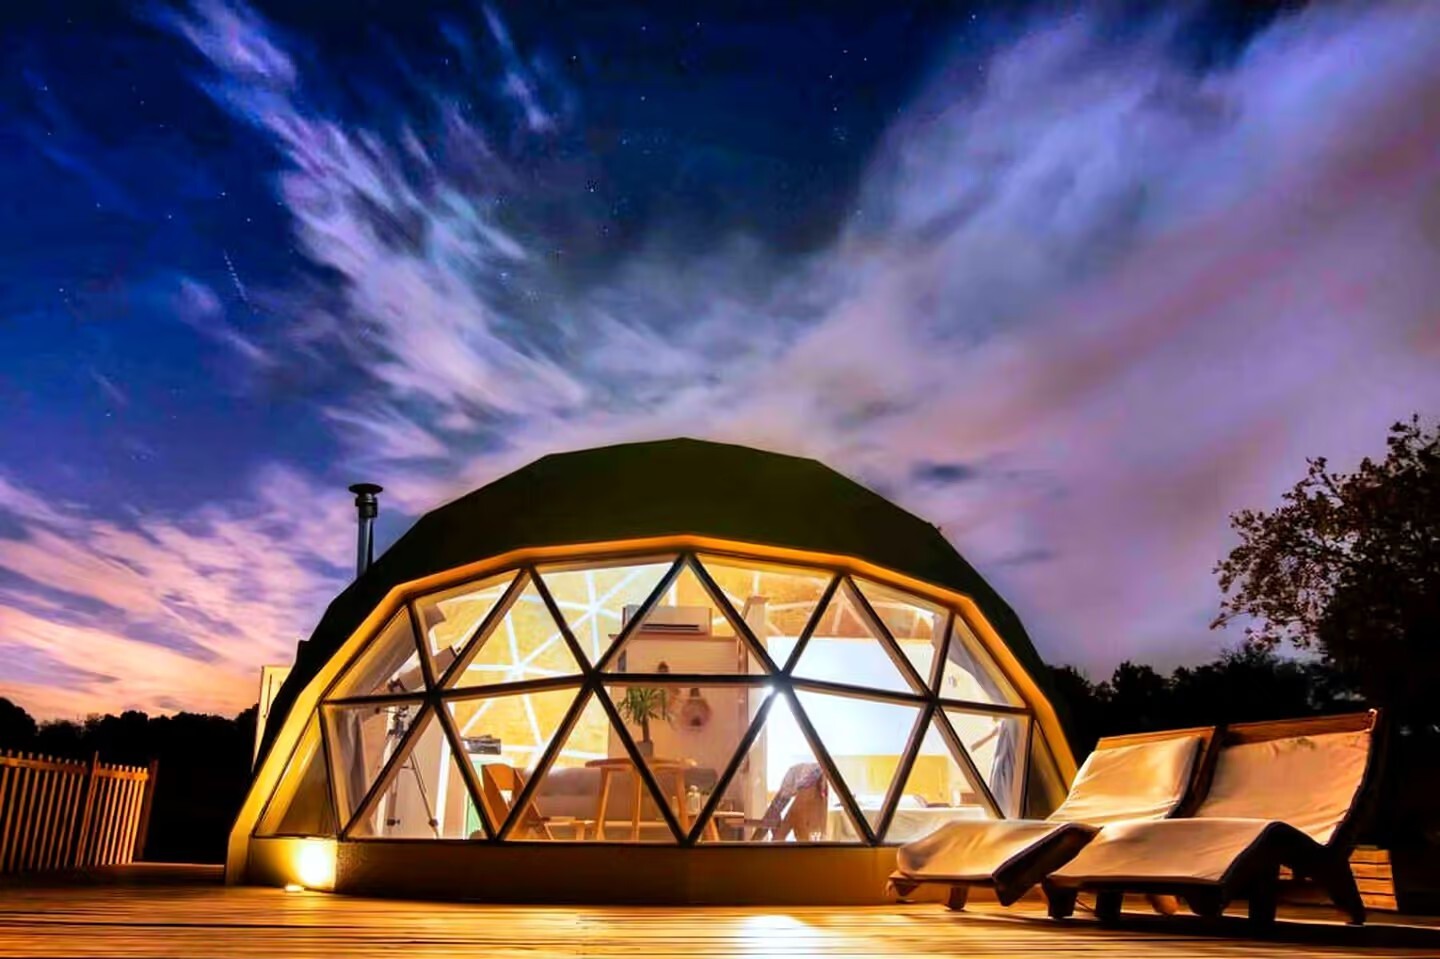 Concepte de disseny de tendes d'hotel dome丨Equip de disseny de primera classe